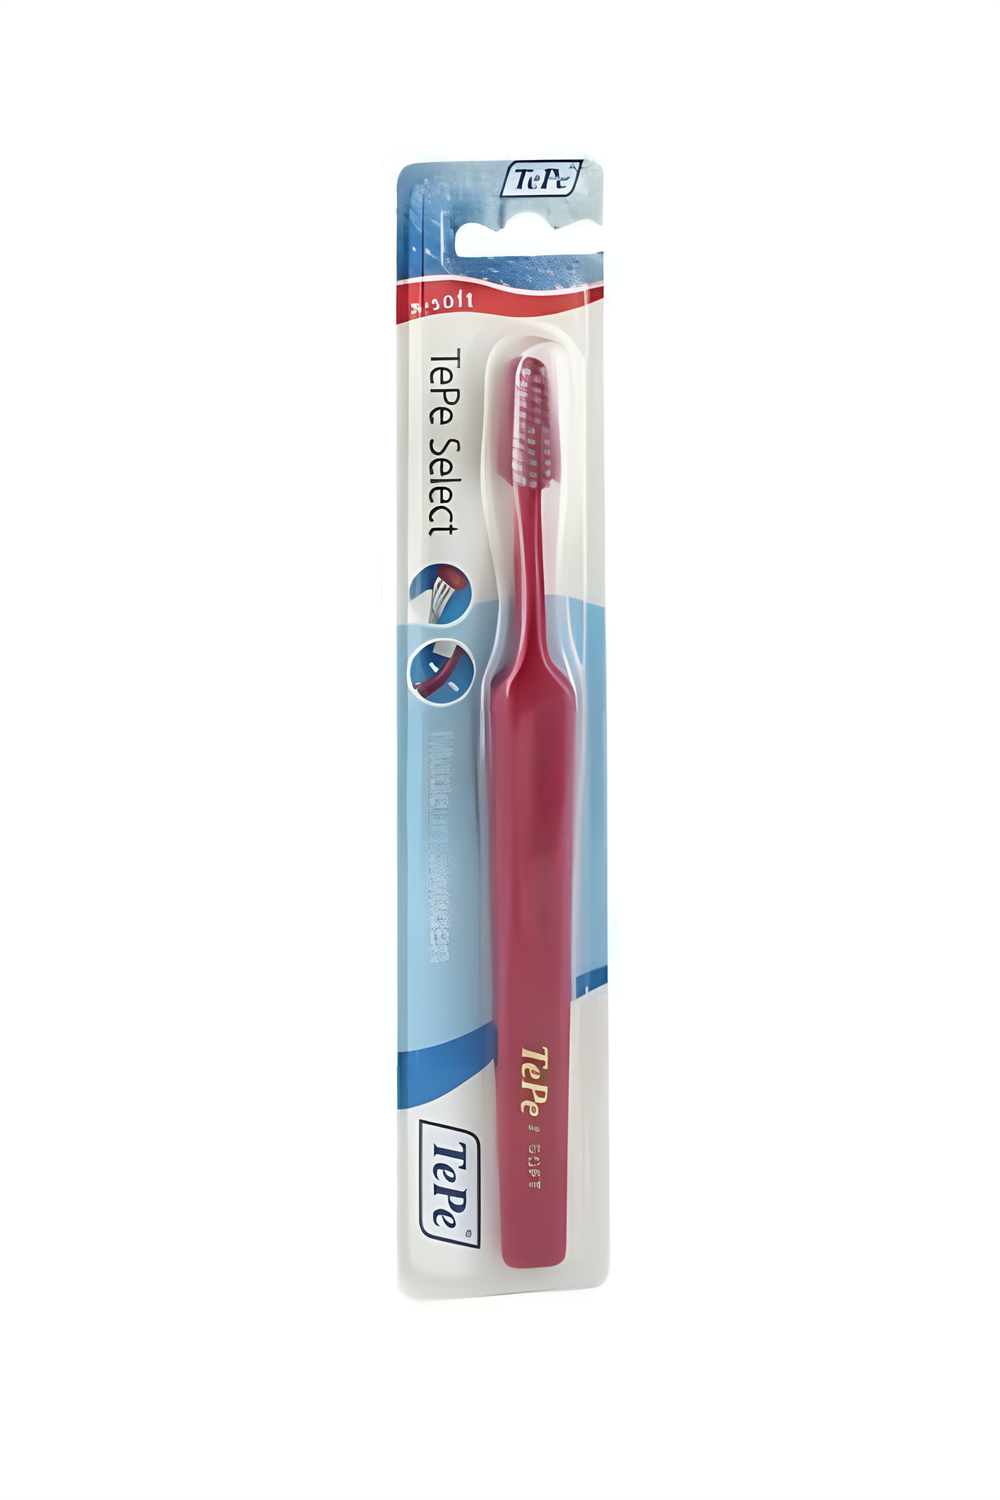 Tepe Select Extra Soft Toothbrush-LeylekKapida.com